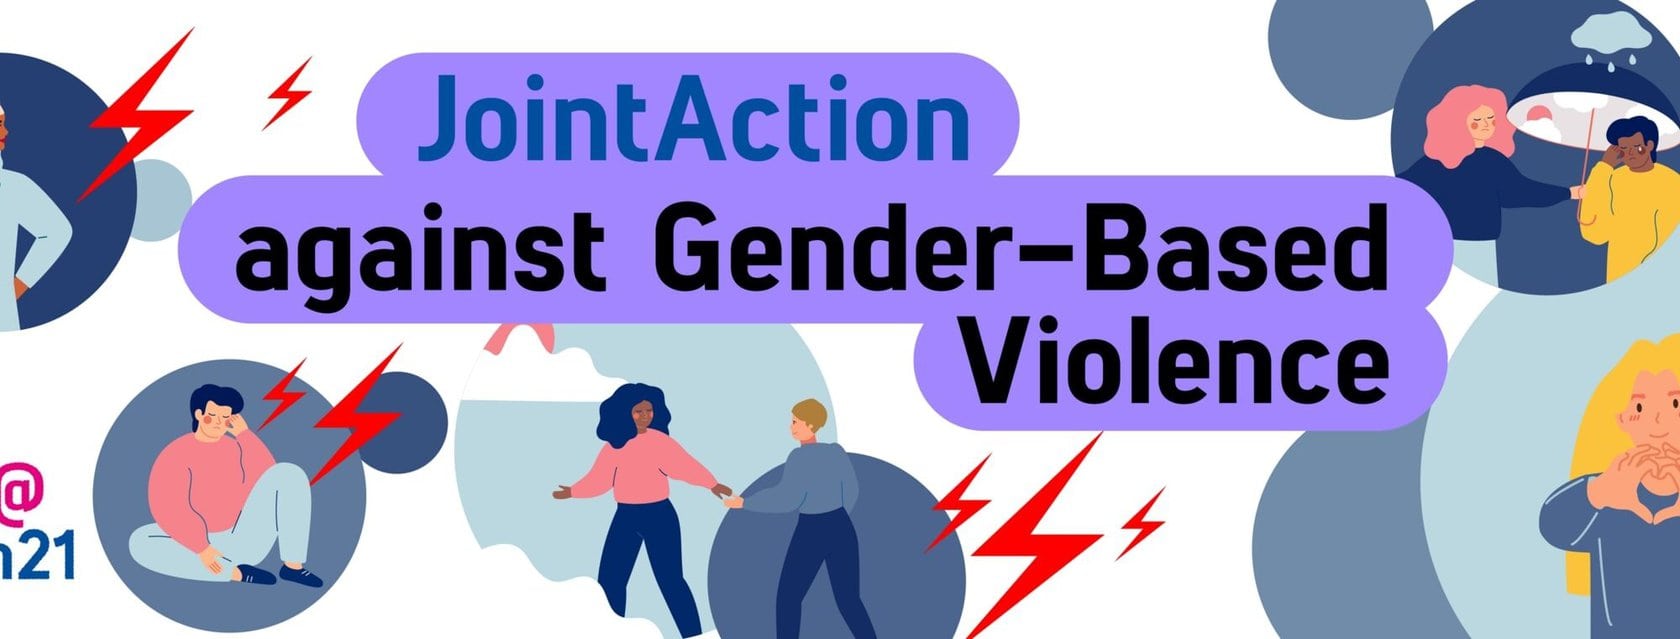 csm jointaction contra la violencia de género 02 9fa4834956